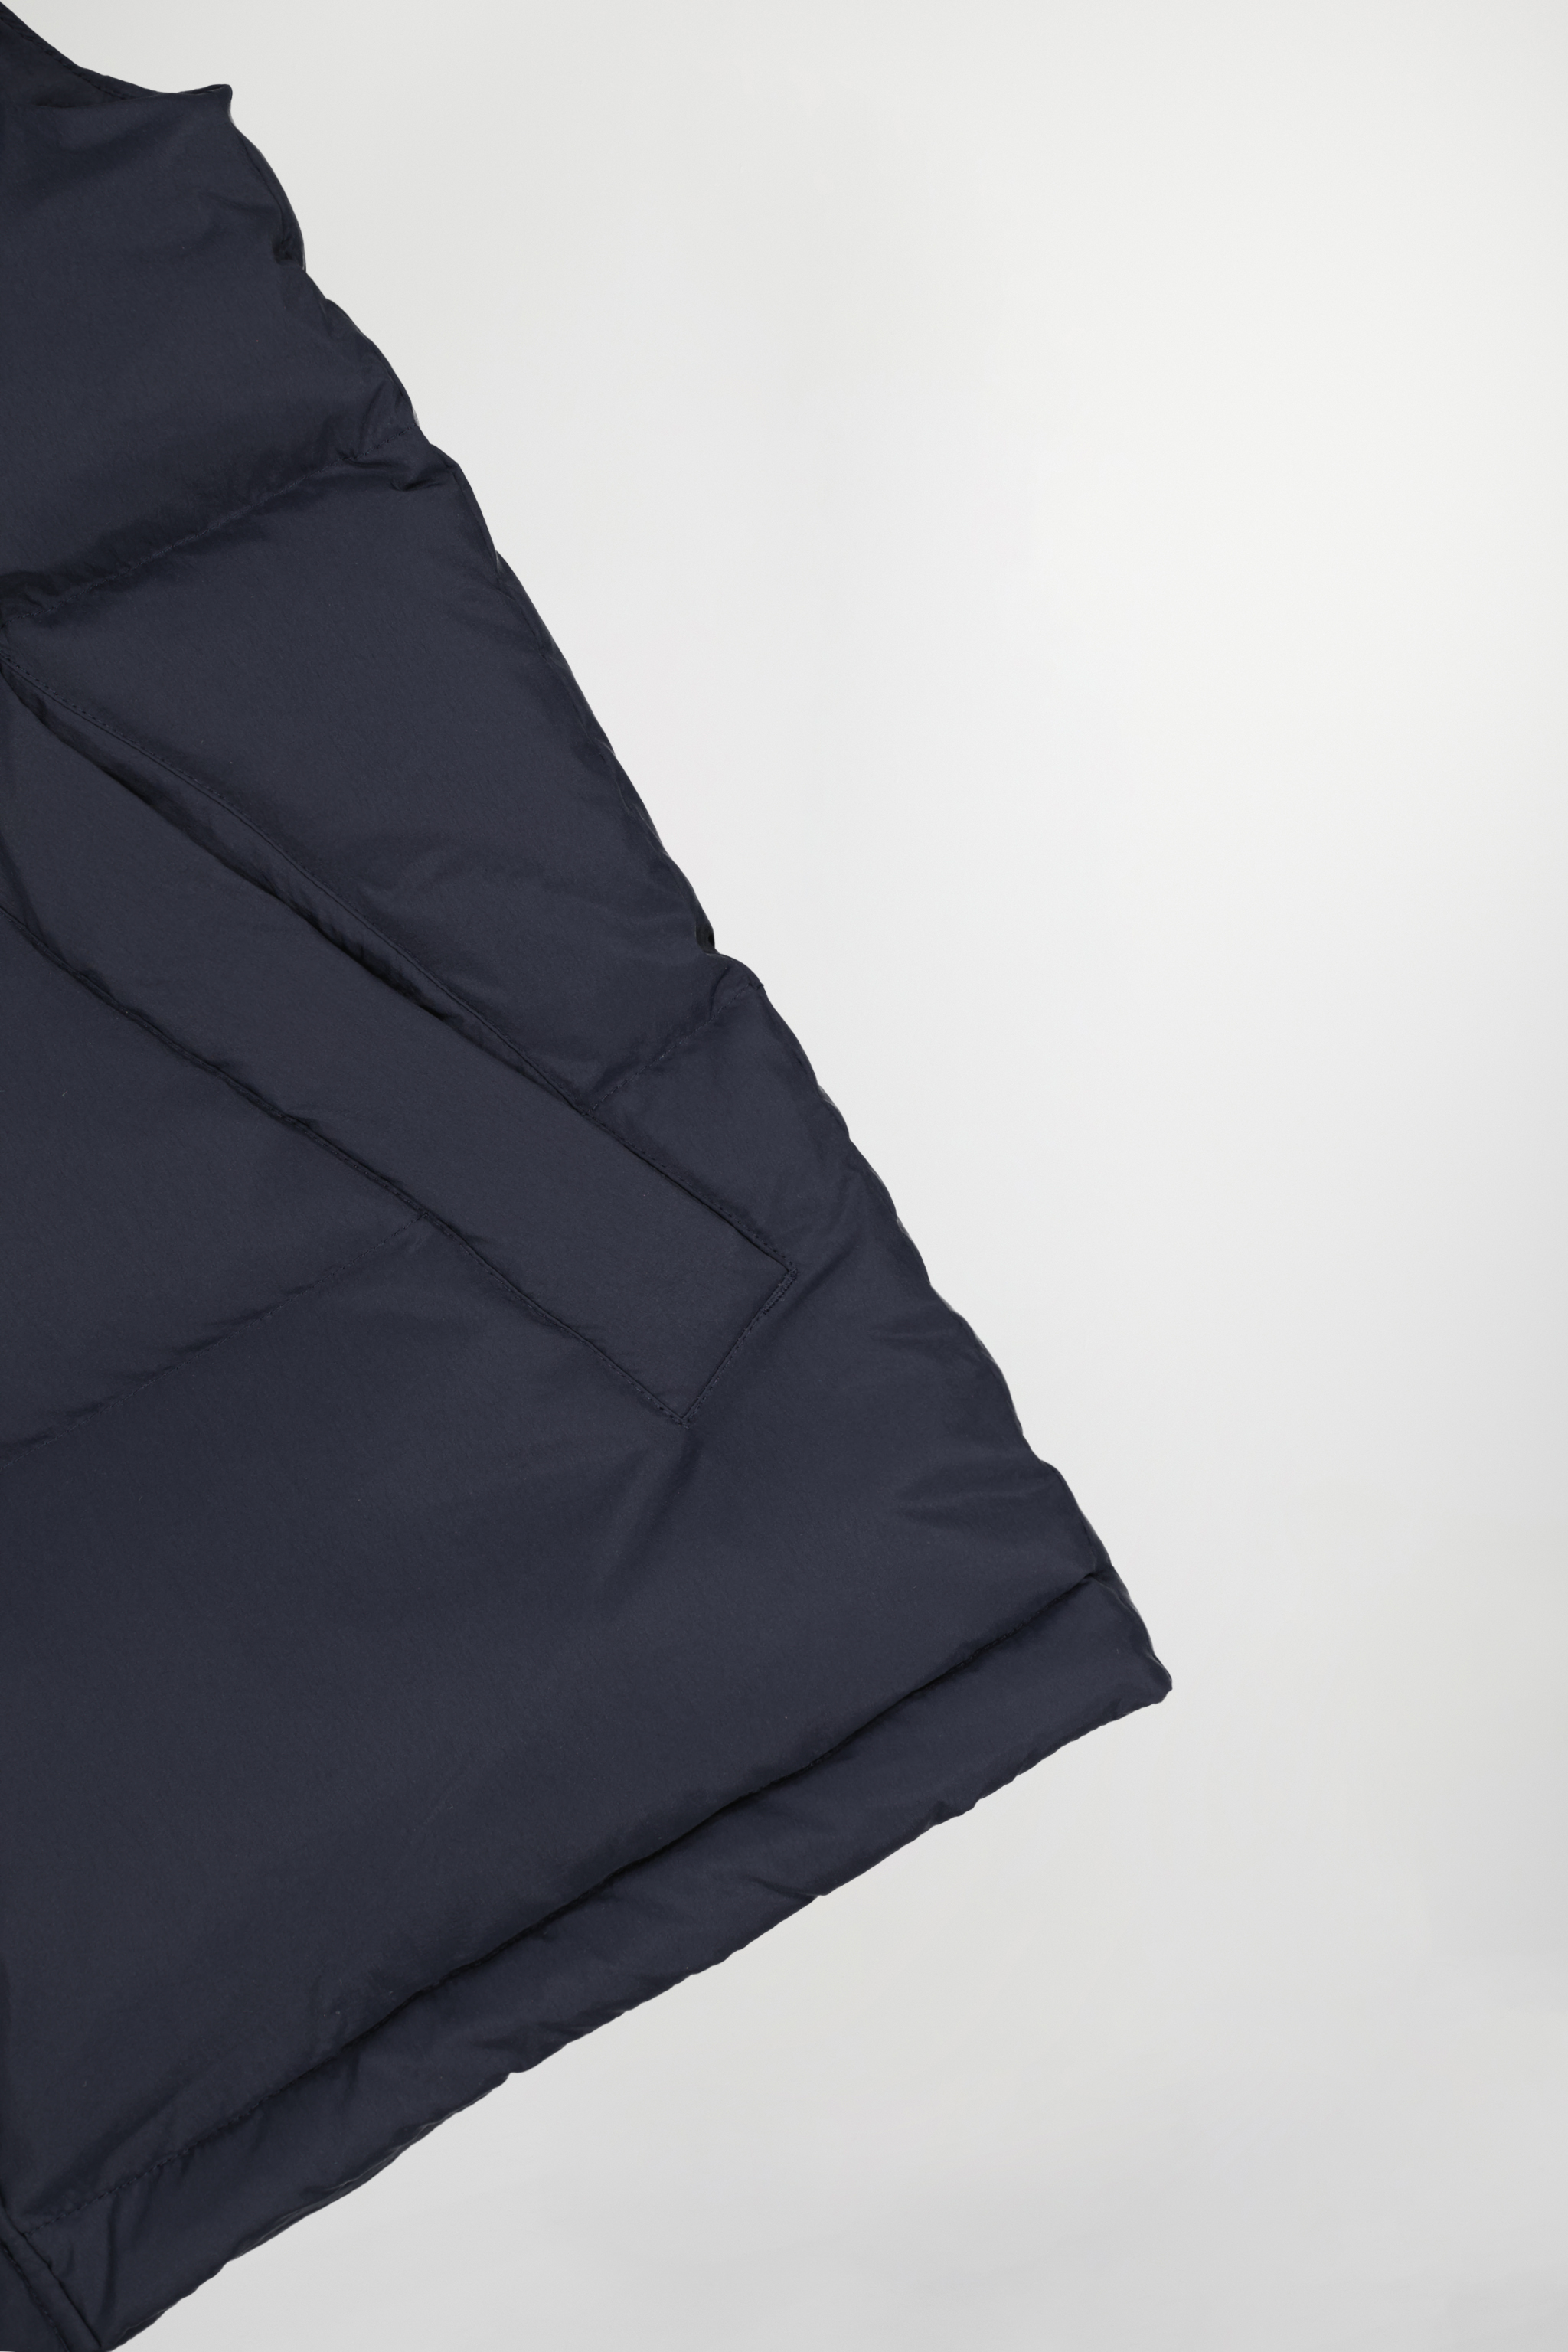 Matthew 8245 men's vest - Blue - Buy online at NN.07®